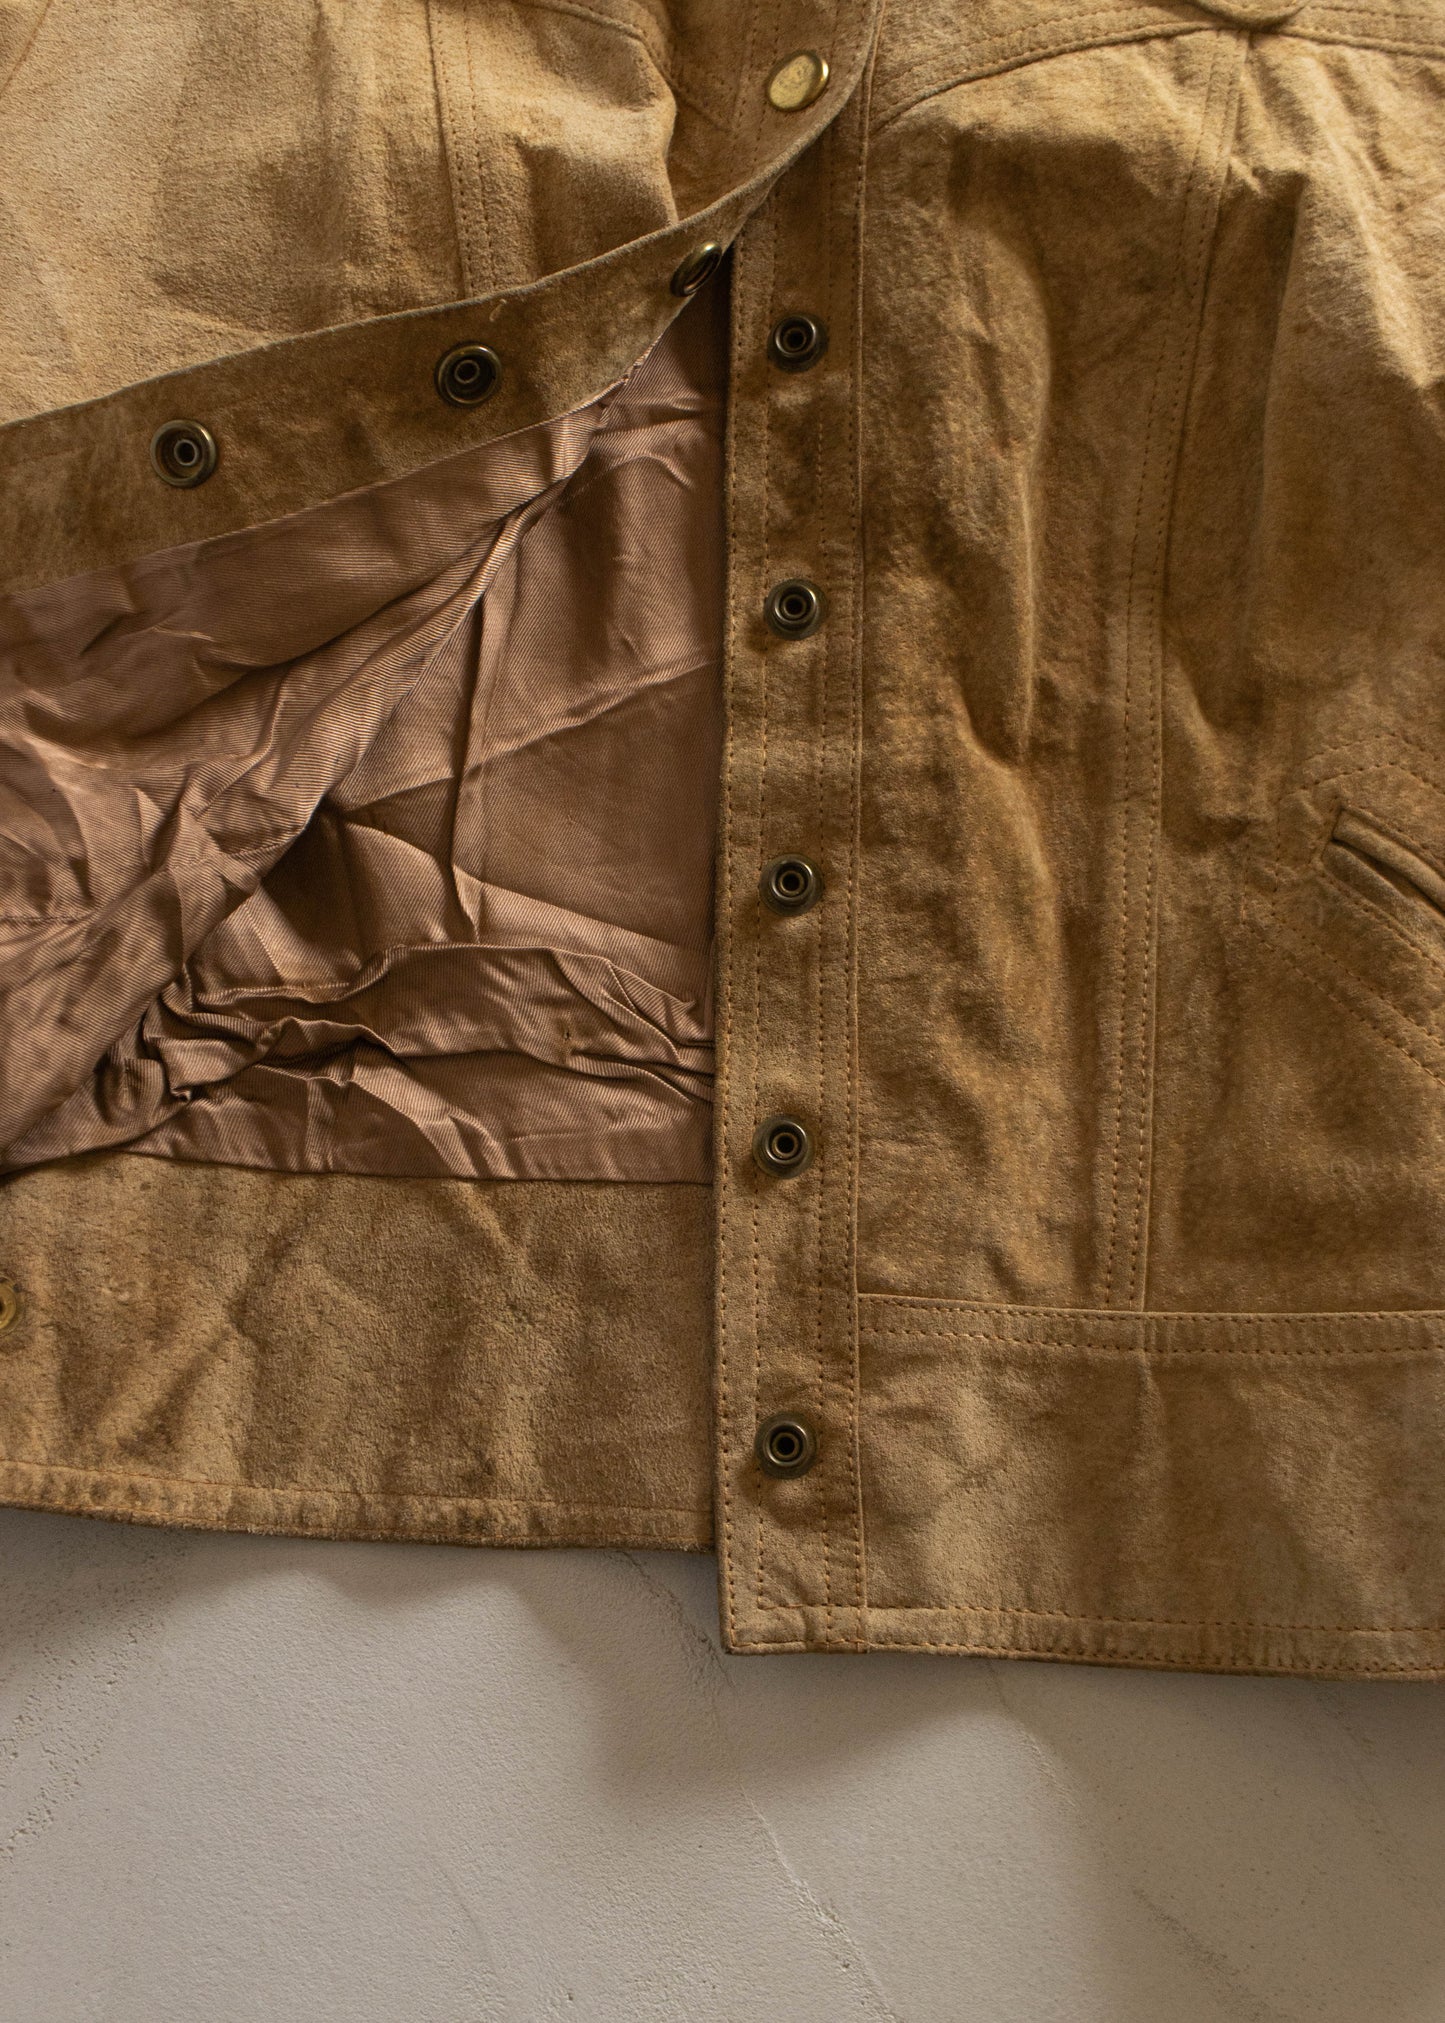 Vintage 1970s Suede Blazer Jacket Size 2XS/XS